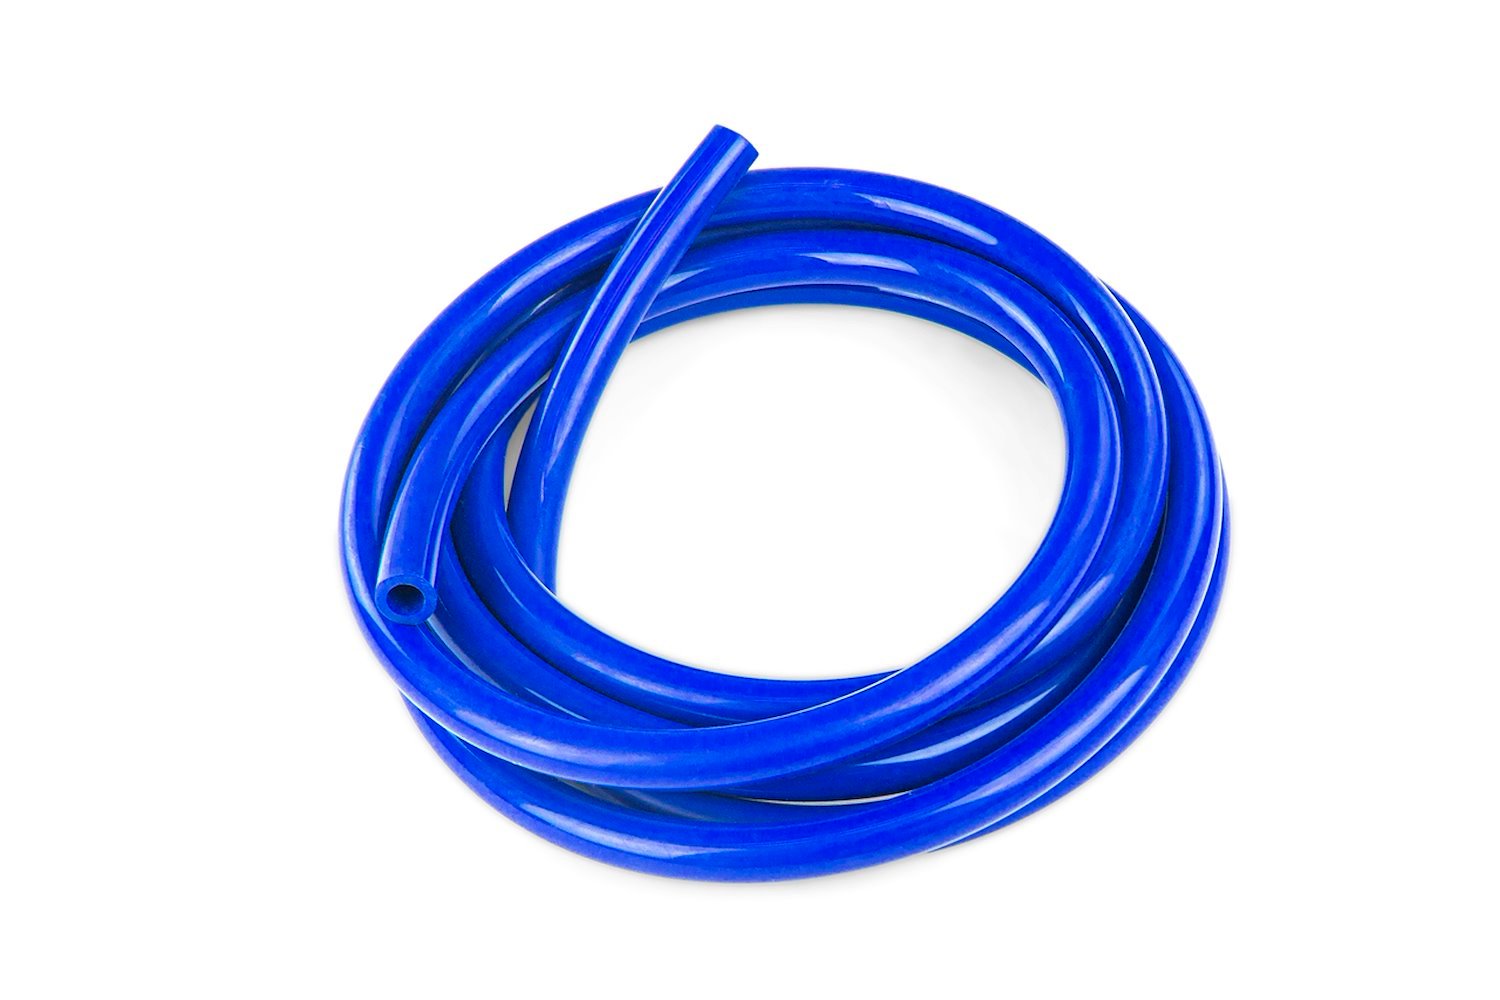 HTSVH8-BLUEx25 High-Temperature Silicone Vacuum Hose Tubing, 5/16 in. ID, 25 ft. Roll, Blue